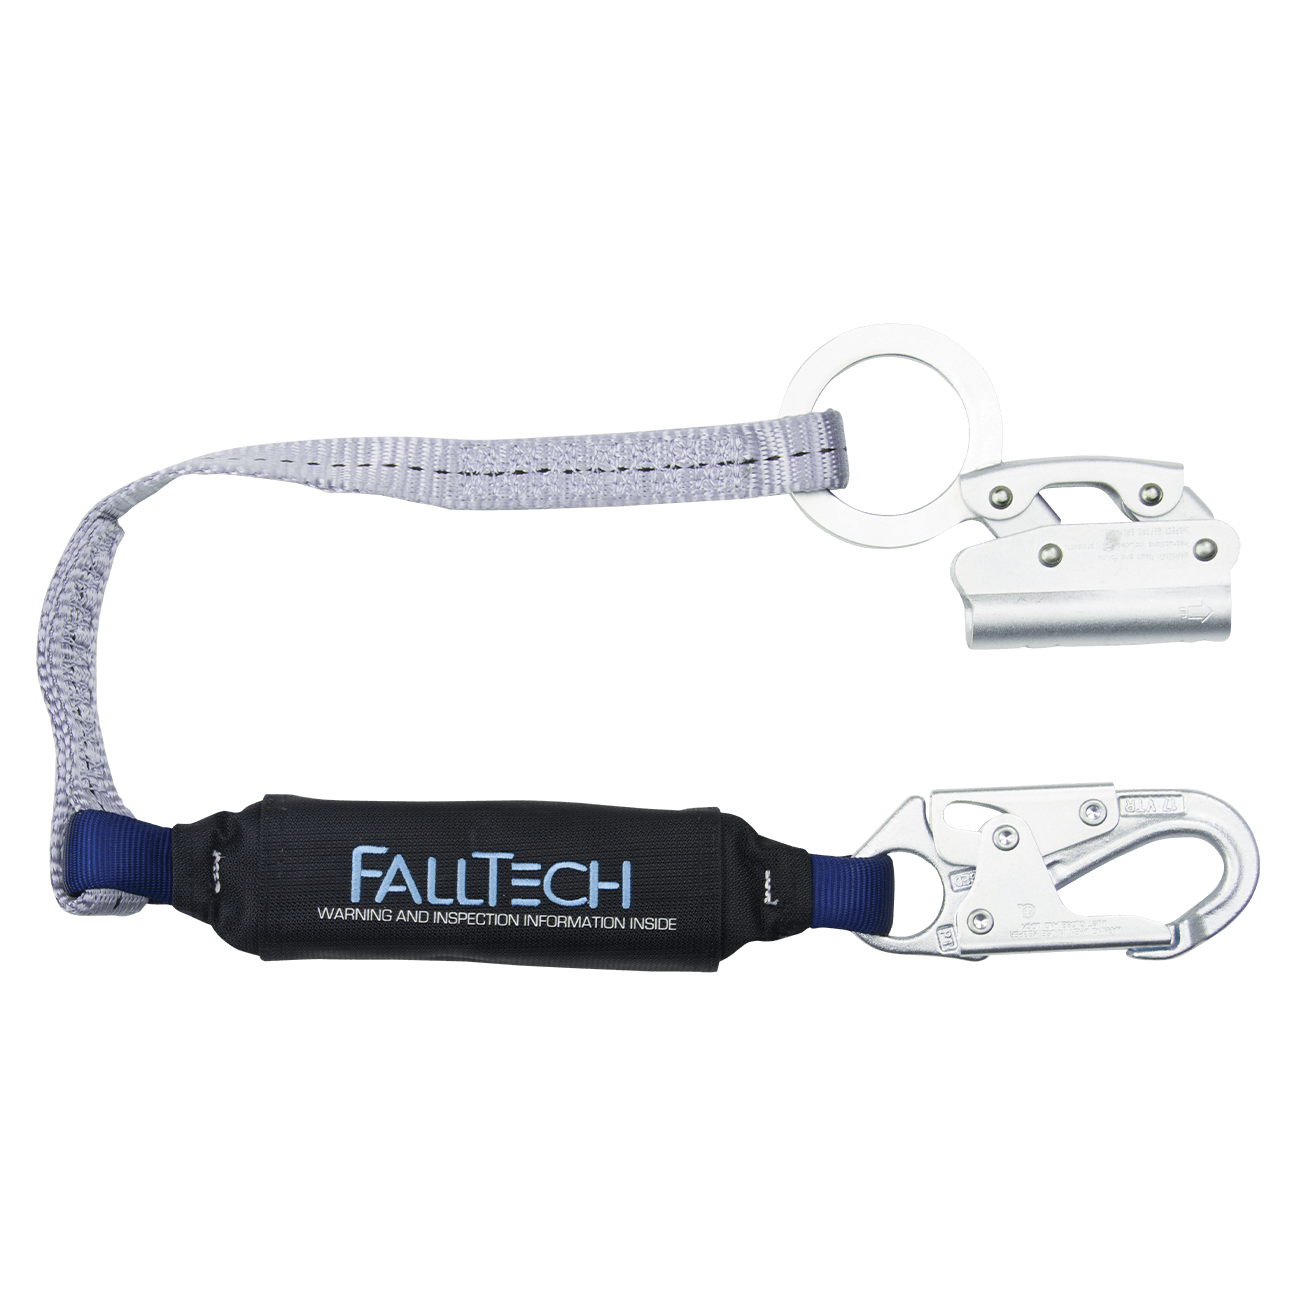 Rope Grabber View Pack Ajustador manual de color azul para poliéster de 5/8" con cordón de 3' 8353 Falltech